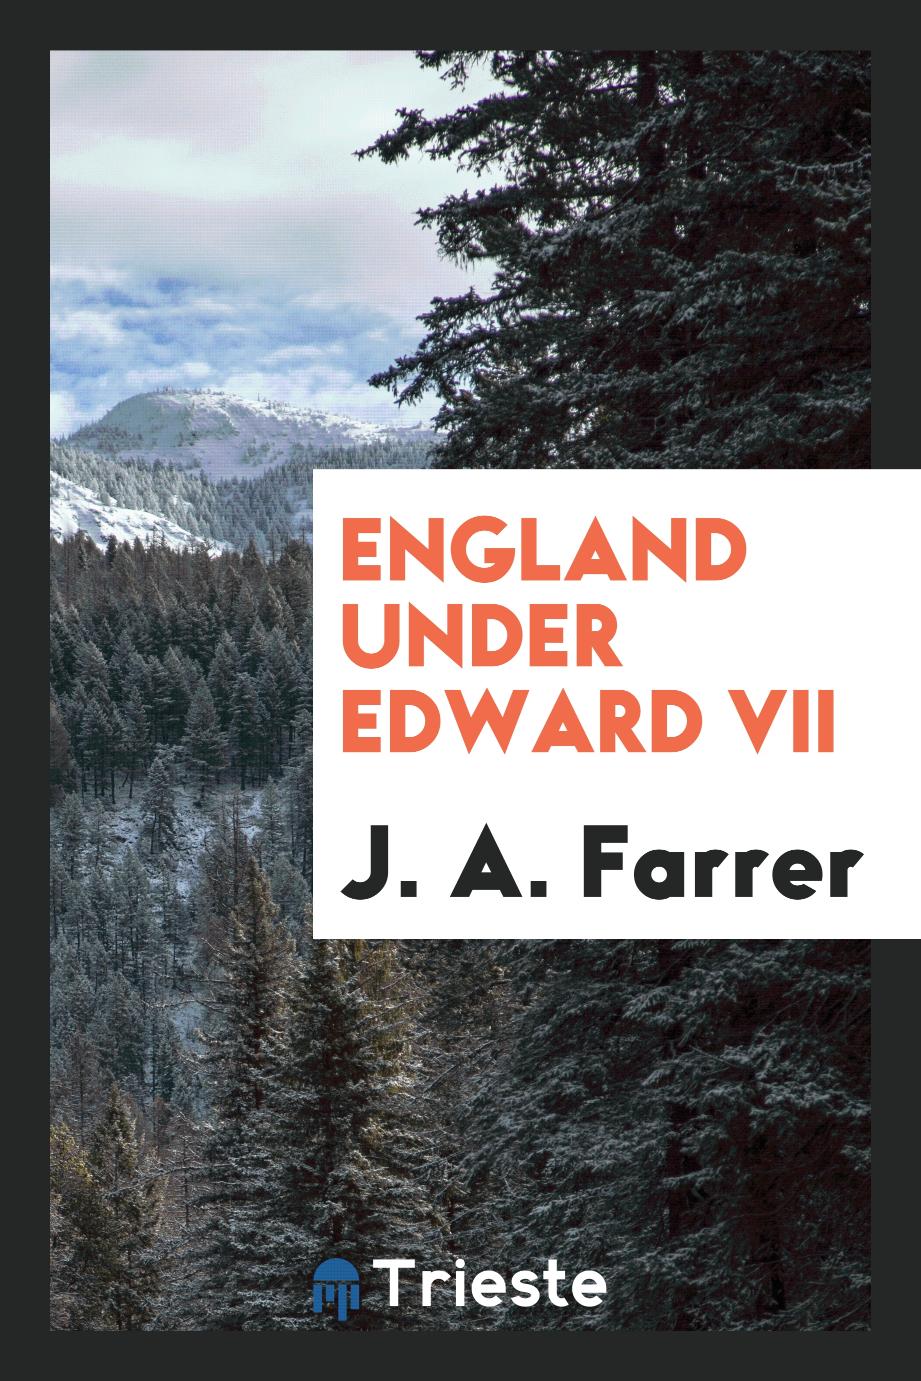 England under Edward VII